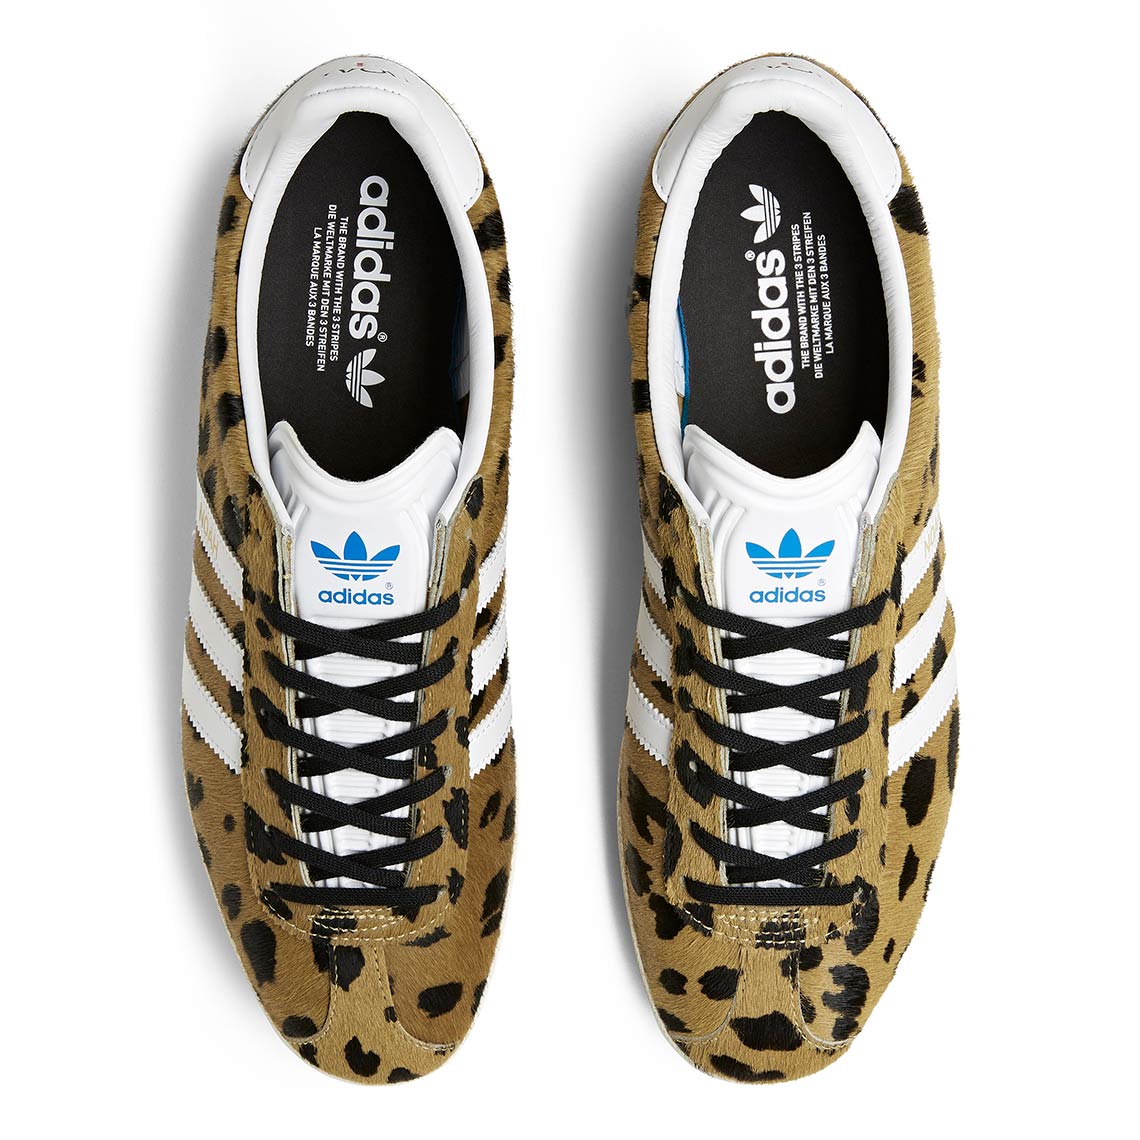 adidas gazelle femme leopard